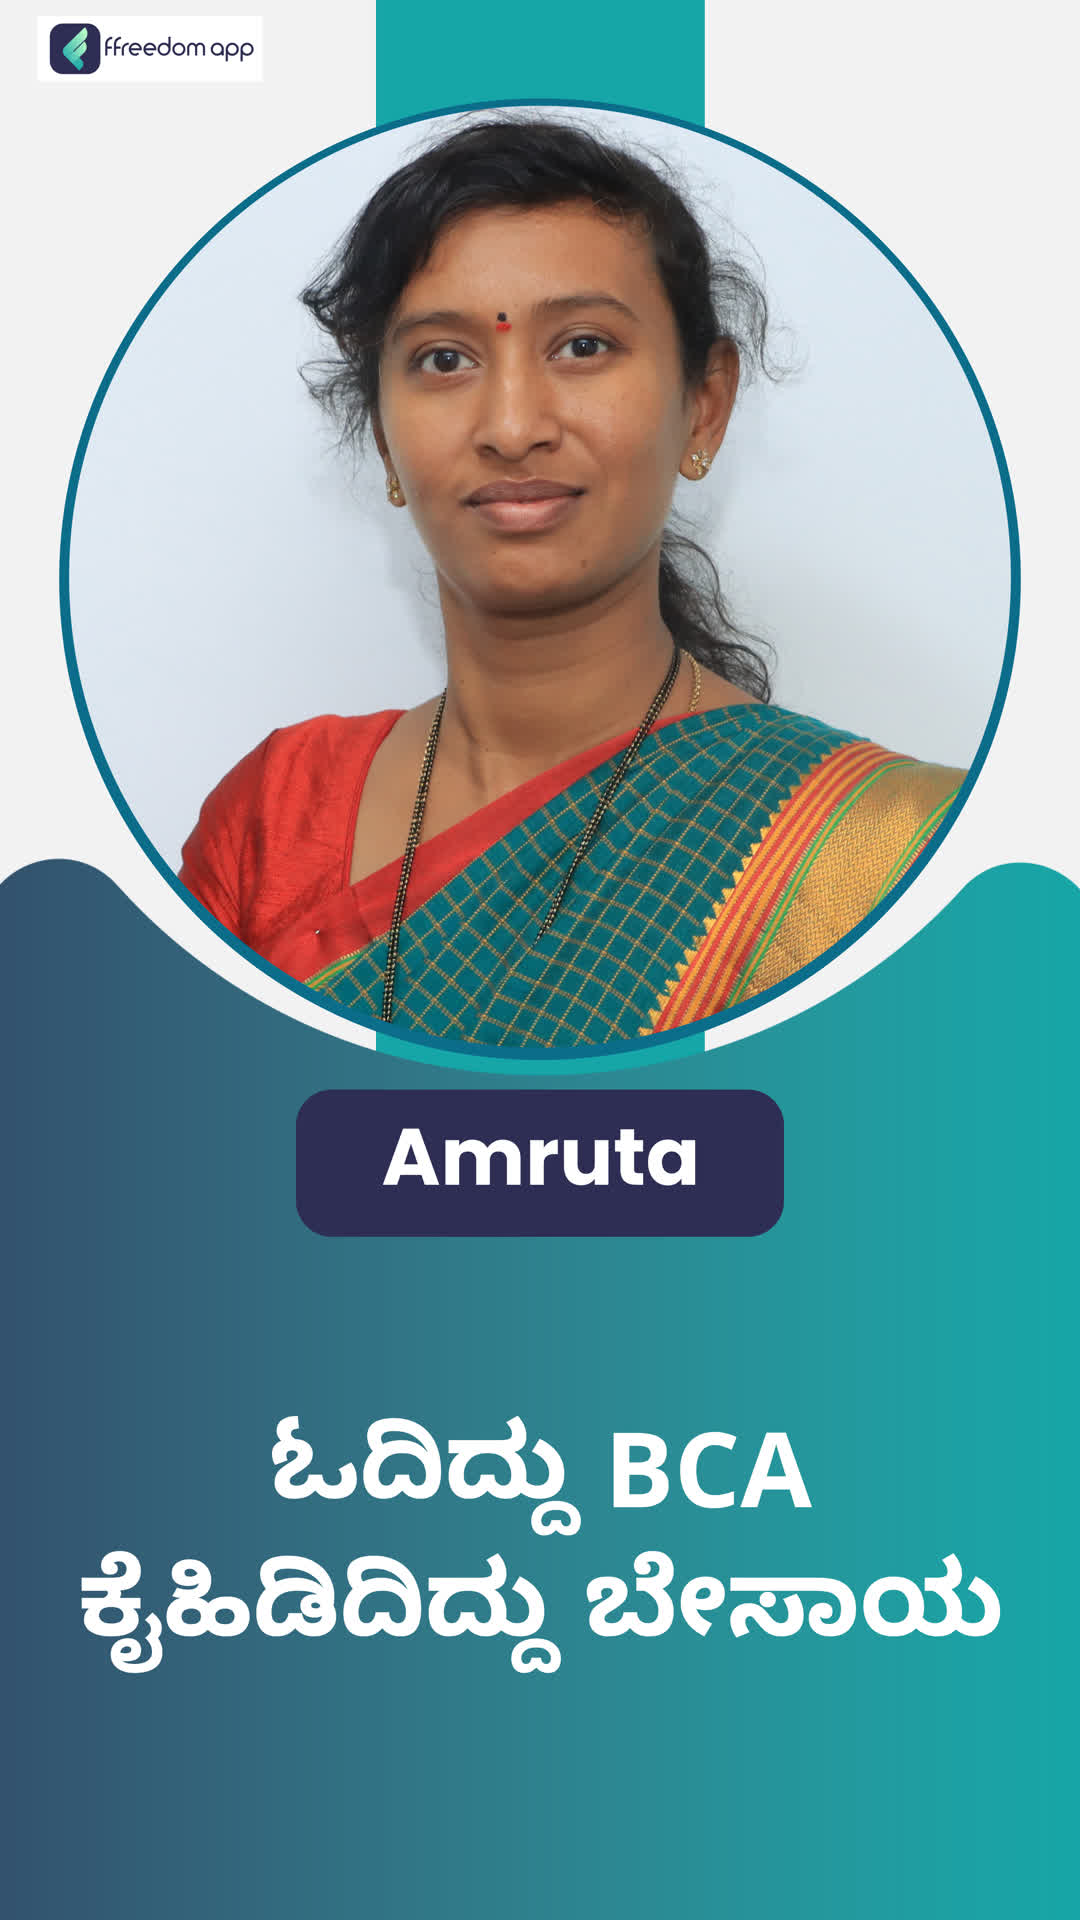 Amrutaa Perumal's Honest Review of ffreedom app - Chitradurga ,Karnataka